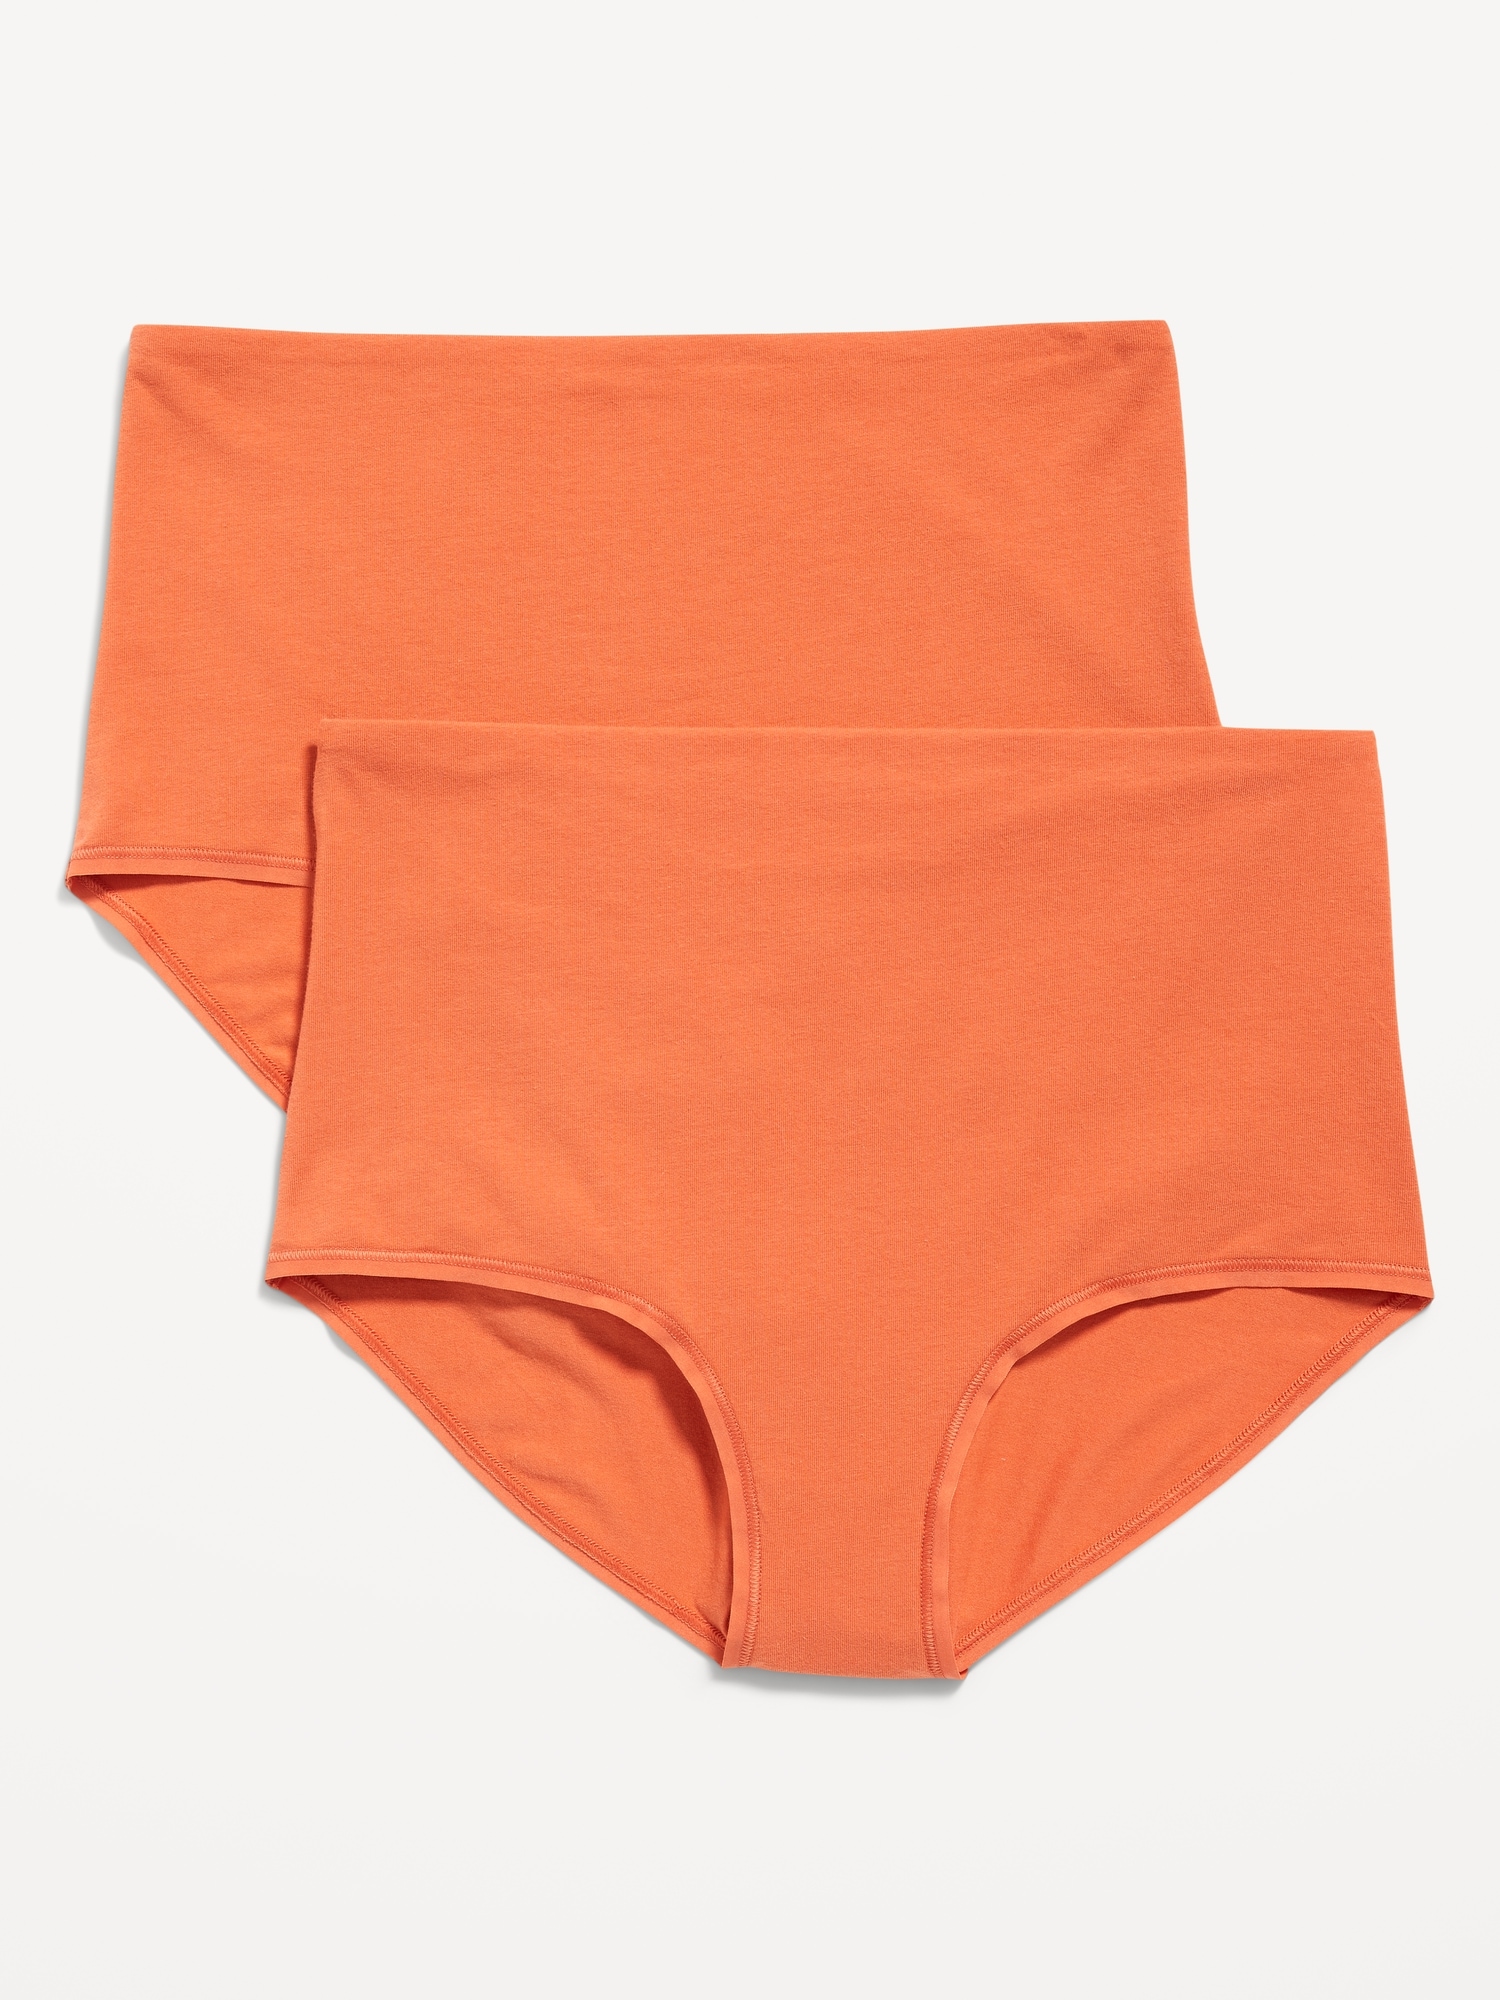 WEANT Underwear Women Pack Cotton Women's Underwear Cotton Super High  Waisted Briefs Stretch Full Coverage Panties (5pcs:4X-Large, Orange AbG) 